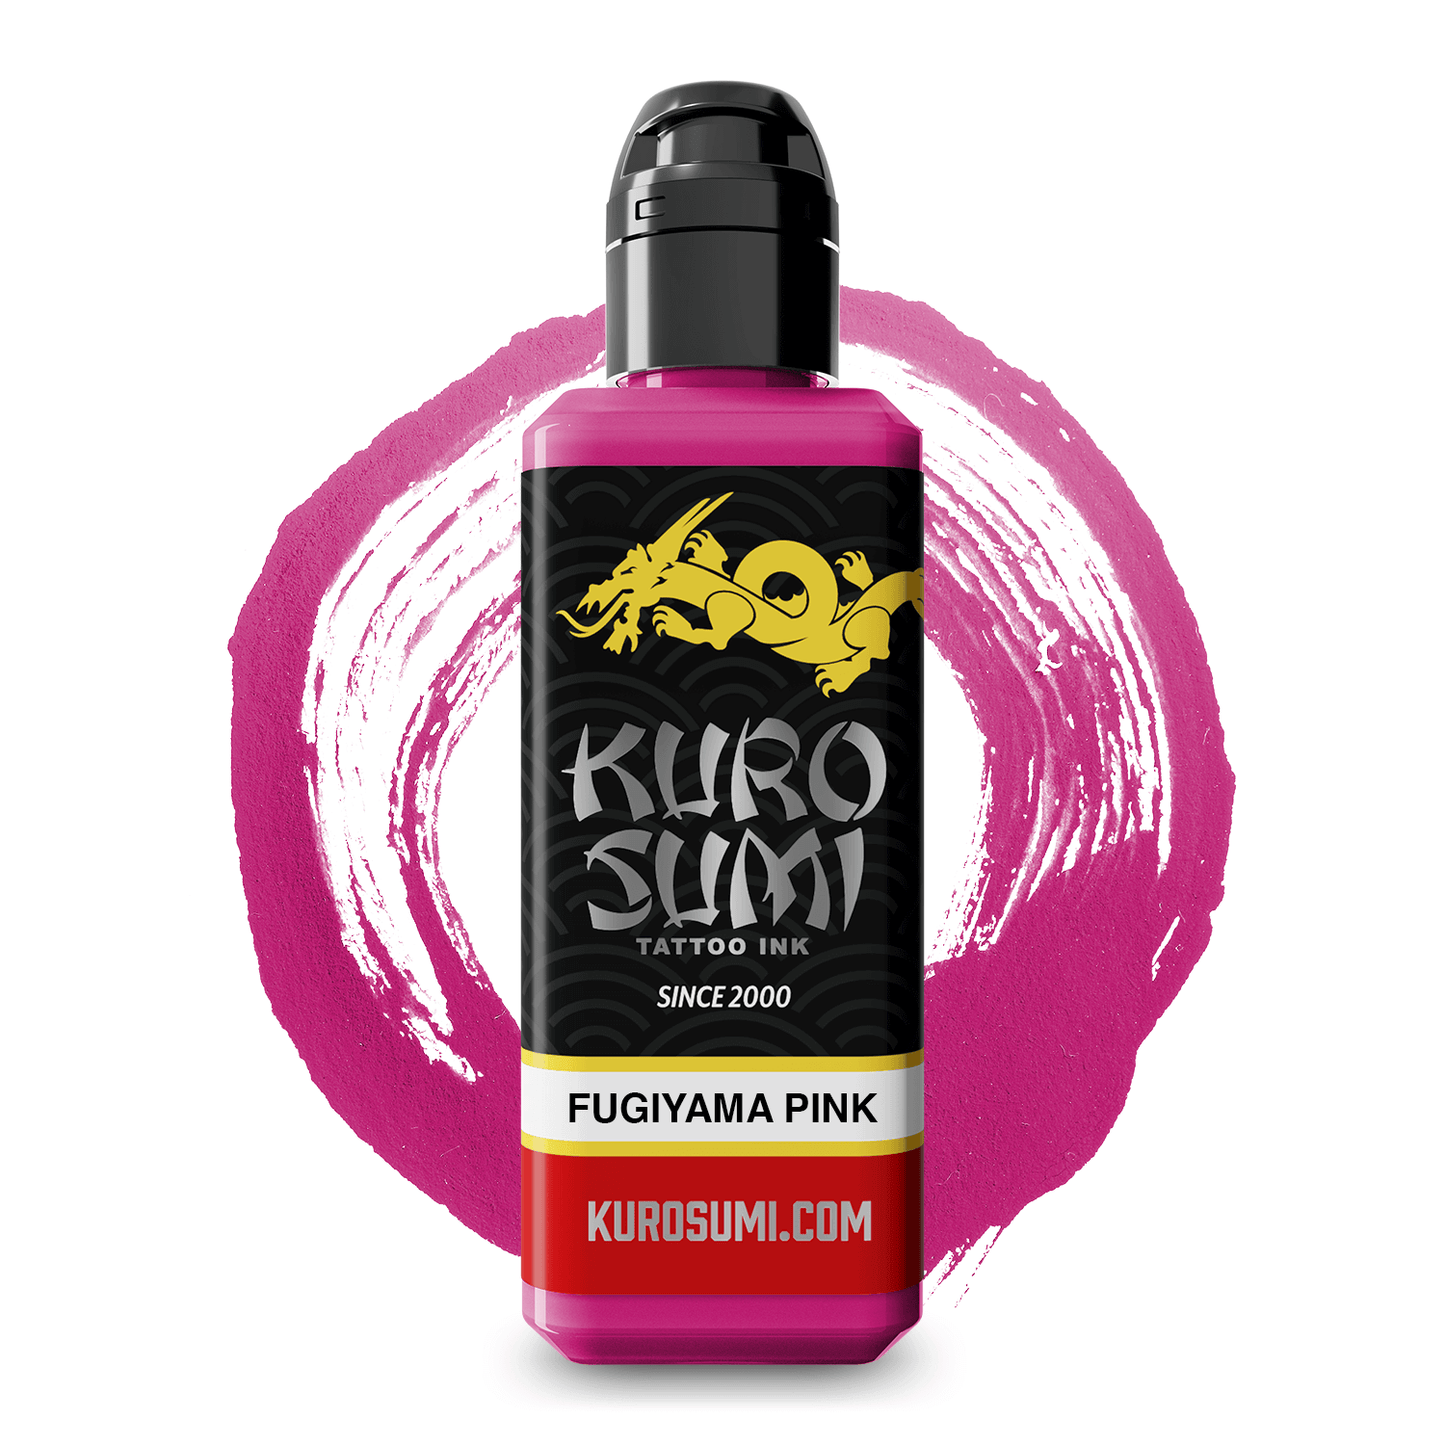 KSFGY Kuro Sumi Fugiyama Pink 3oz